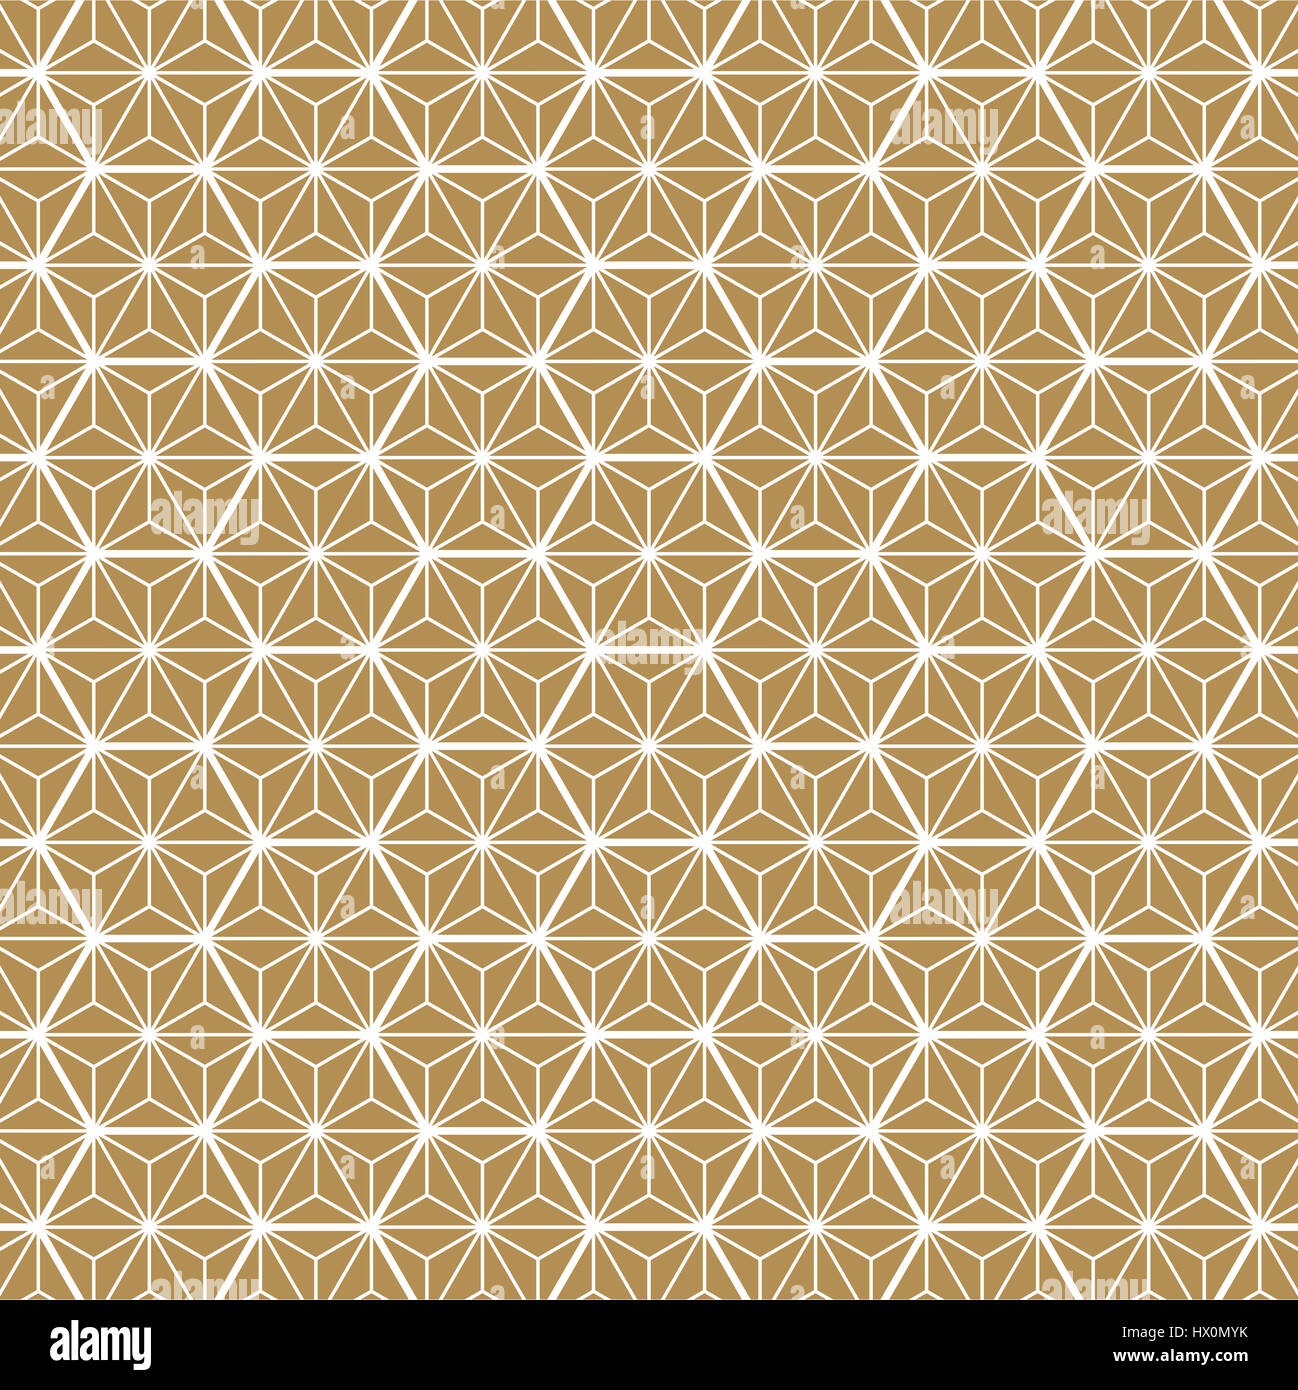 Japanese pattern background. Gold geometric vector. Stock Photo